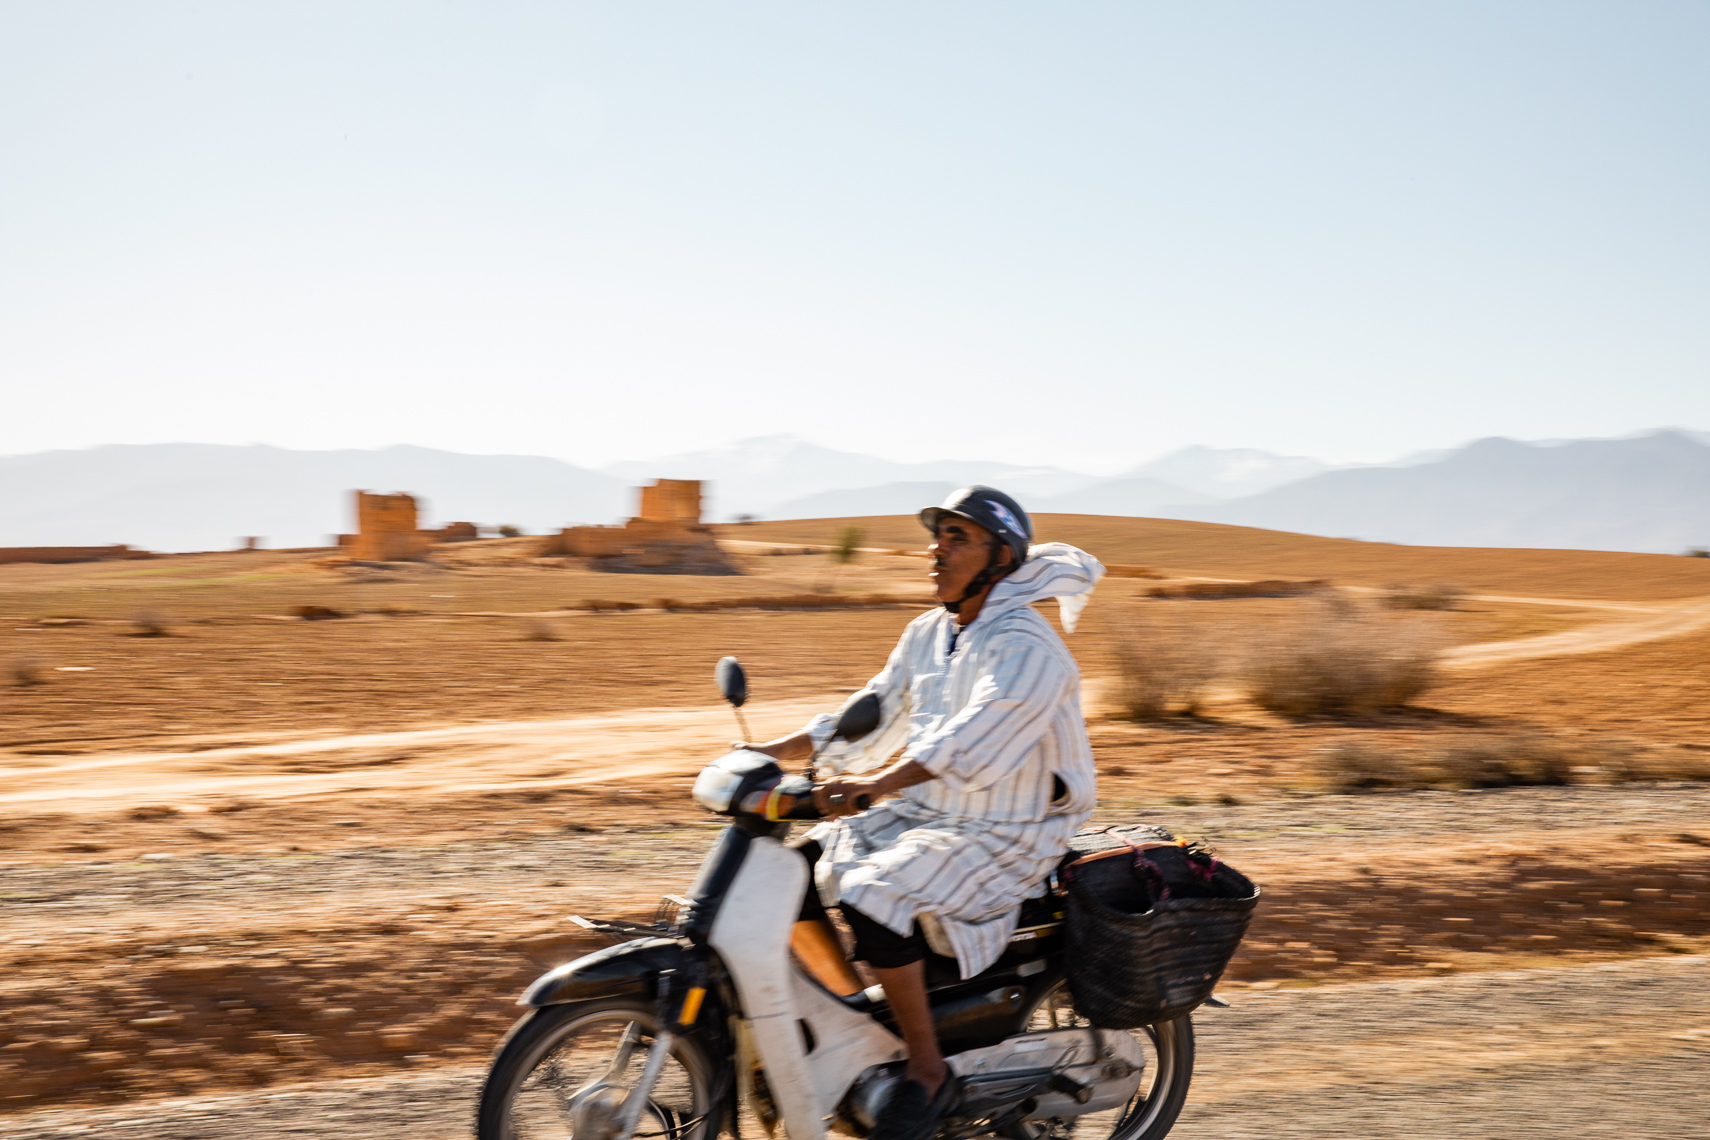 EK_Morocco_RoadToEssaouira_2758